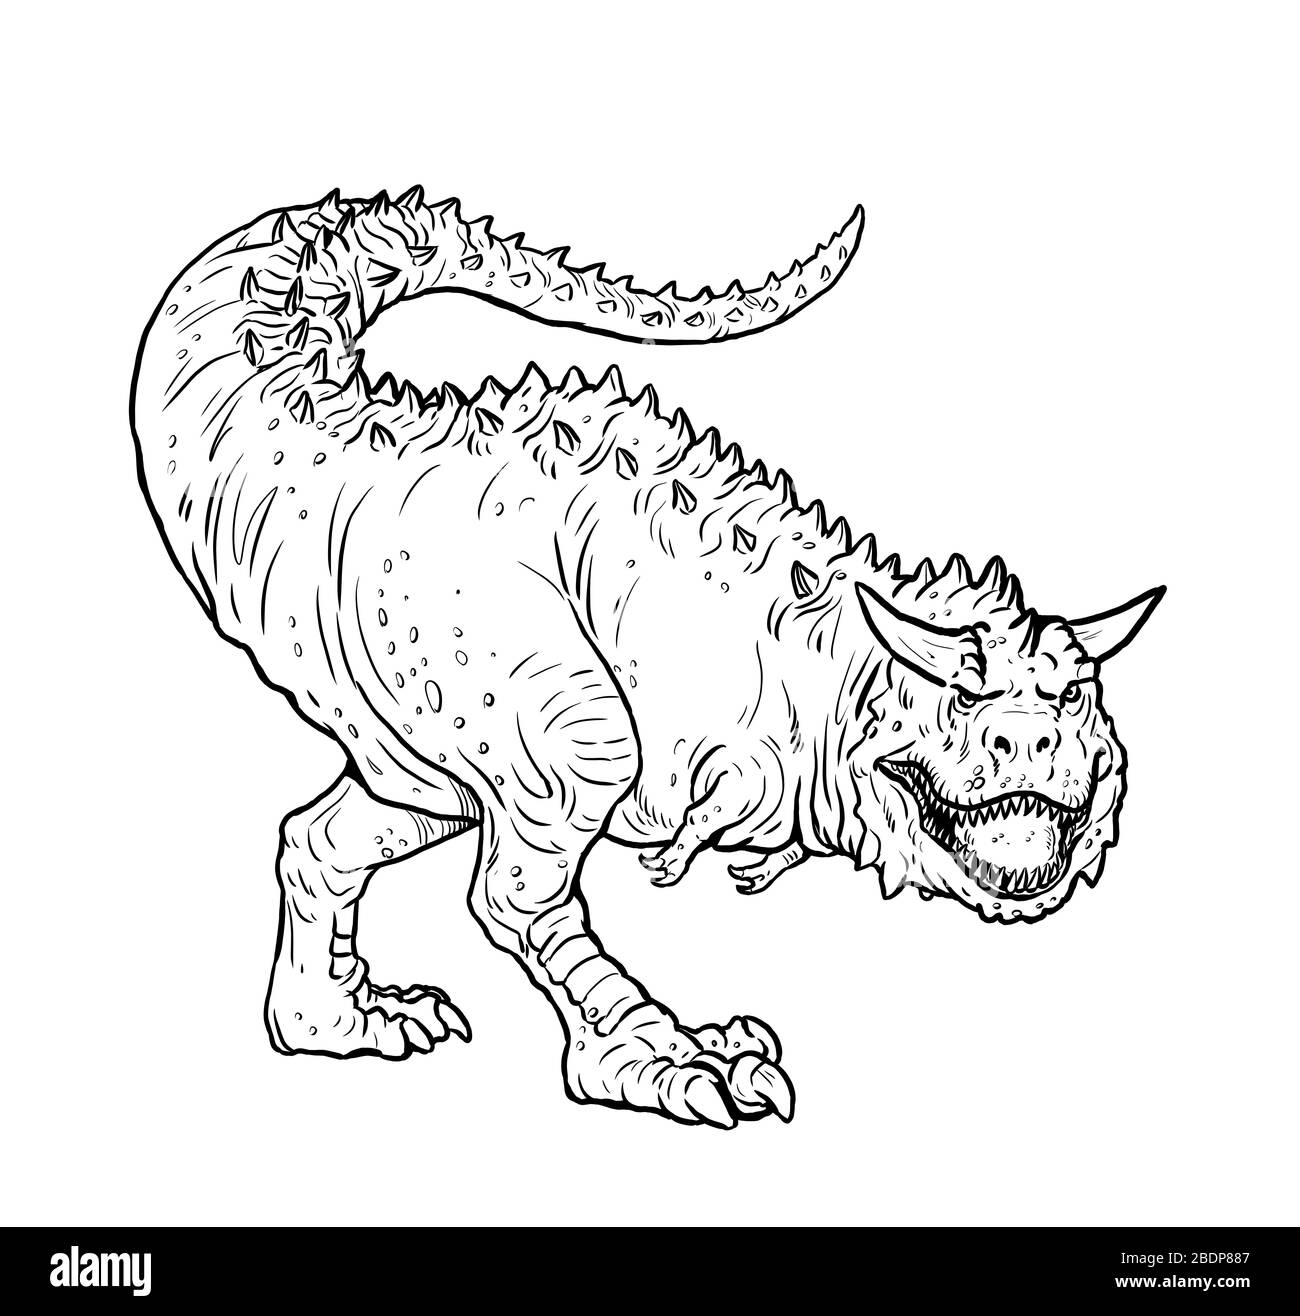 Dinosaur dinosaurs dino carnotaurus hi-res stock photography and images -  Alamy